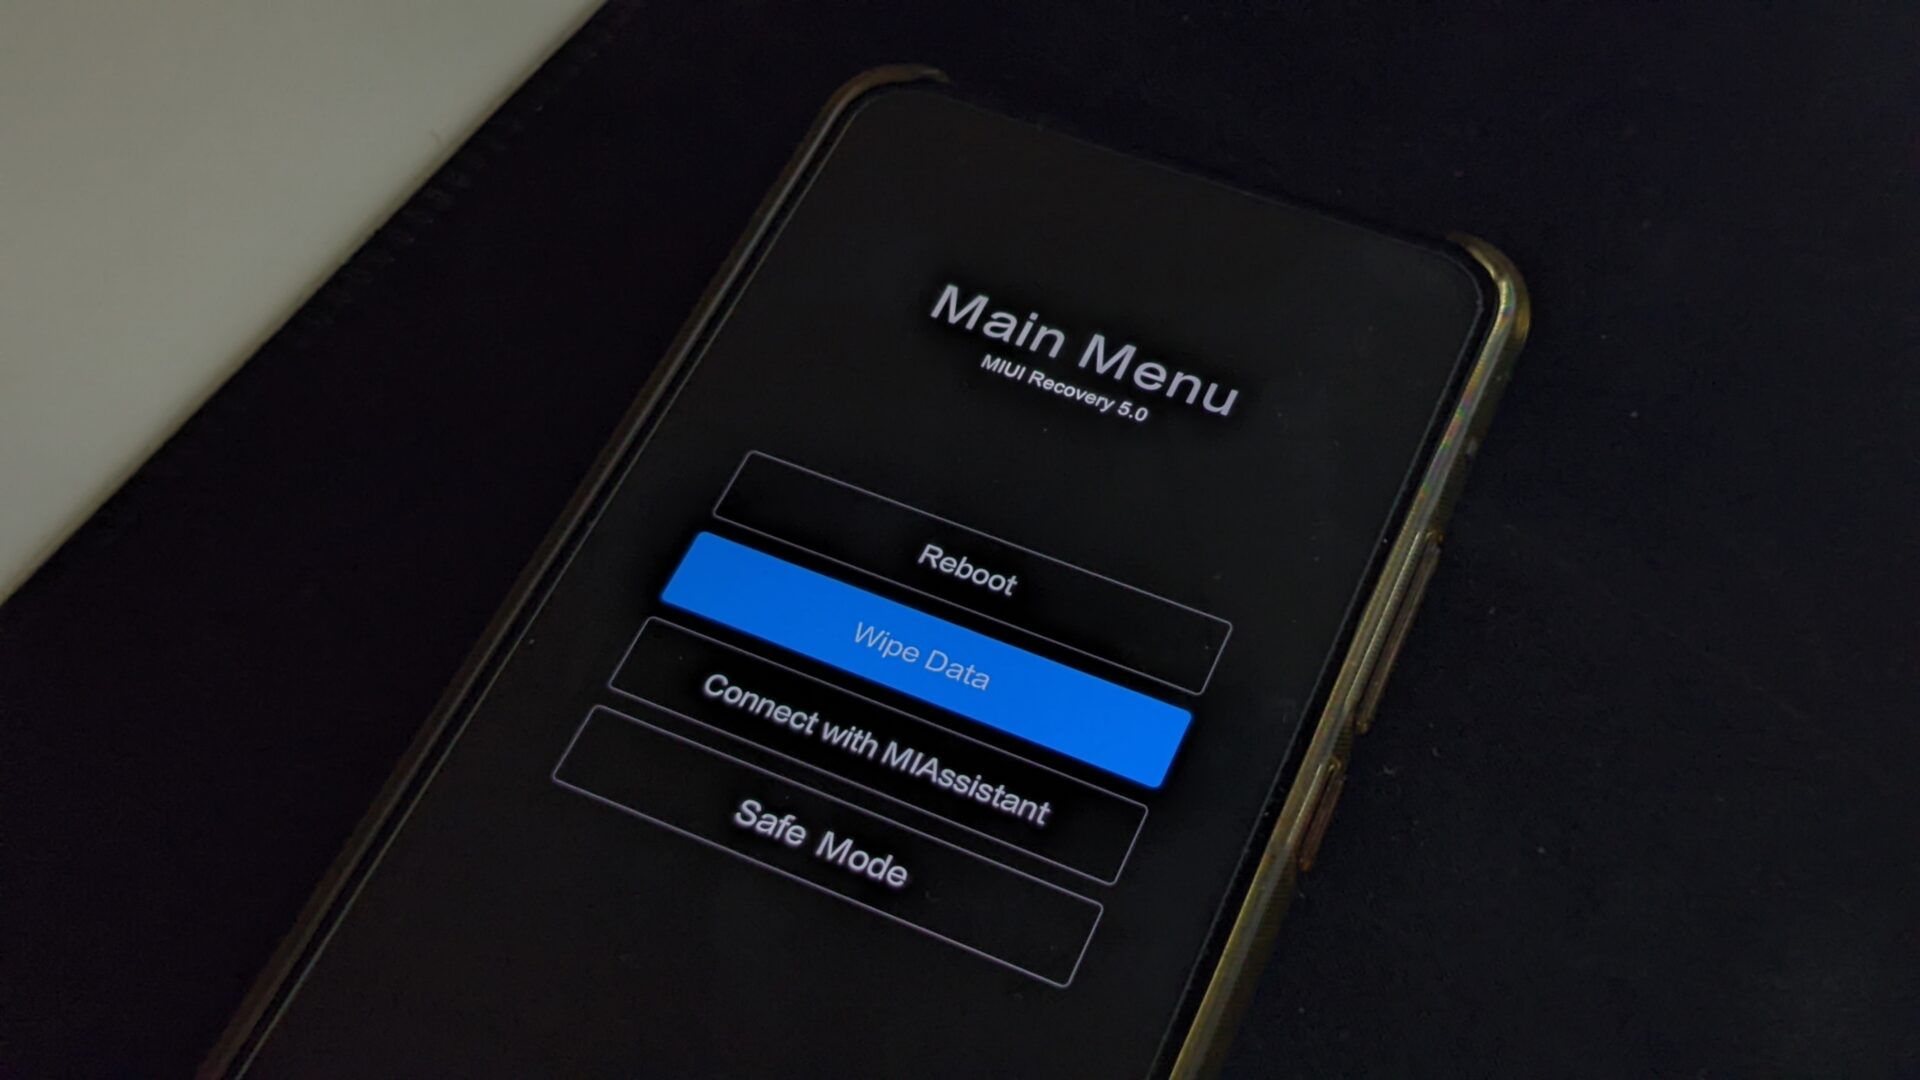 Miui recovery 5.0 miassistant main menu. Wipe data Xiaomi что это. MIUI Recovery 5.0. Функционал MIUI Recovery 5.0. Mi Recovery 3.0.